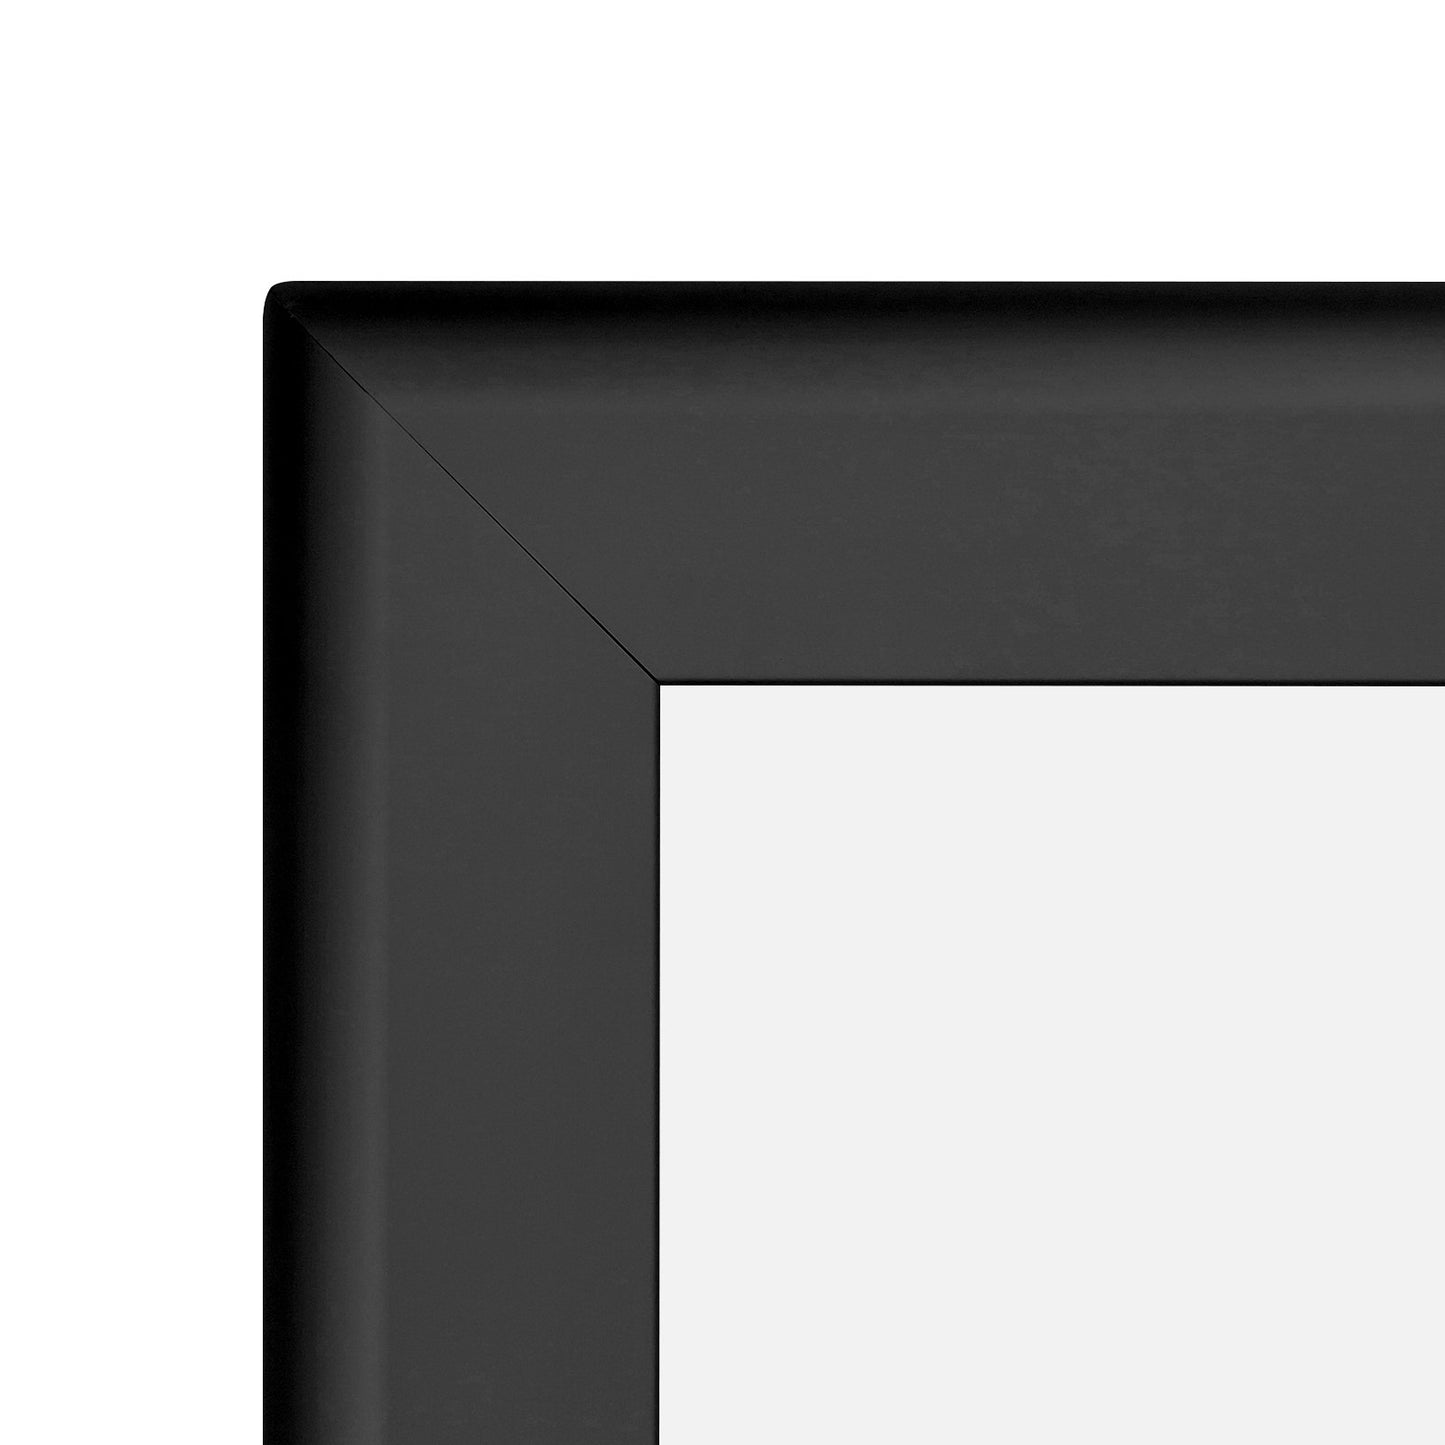 36x50 Black SnapeZo® Snap Frame - 1.7" Profile